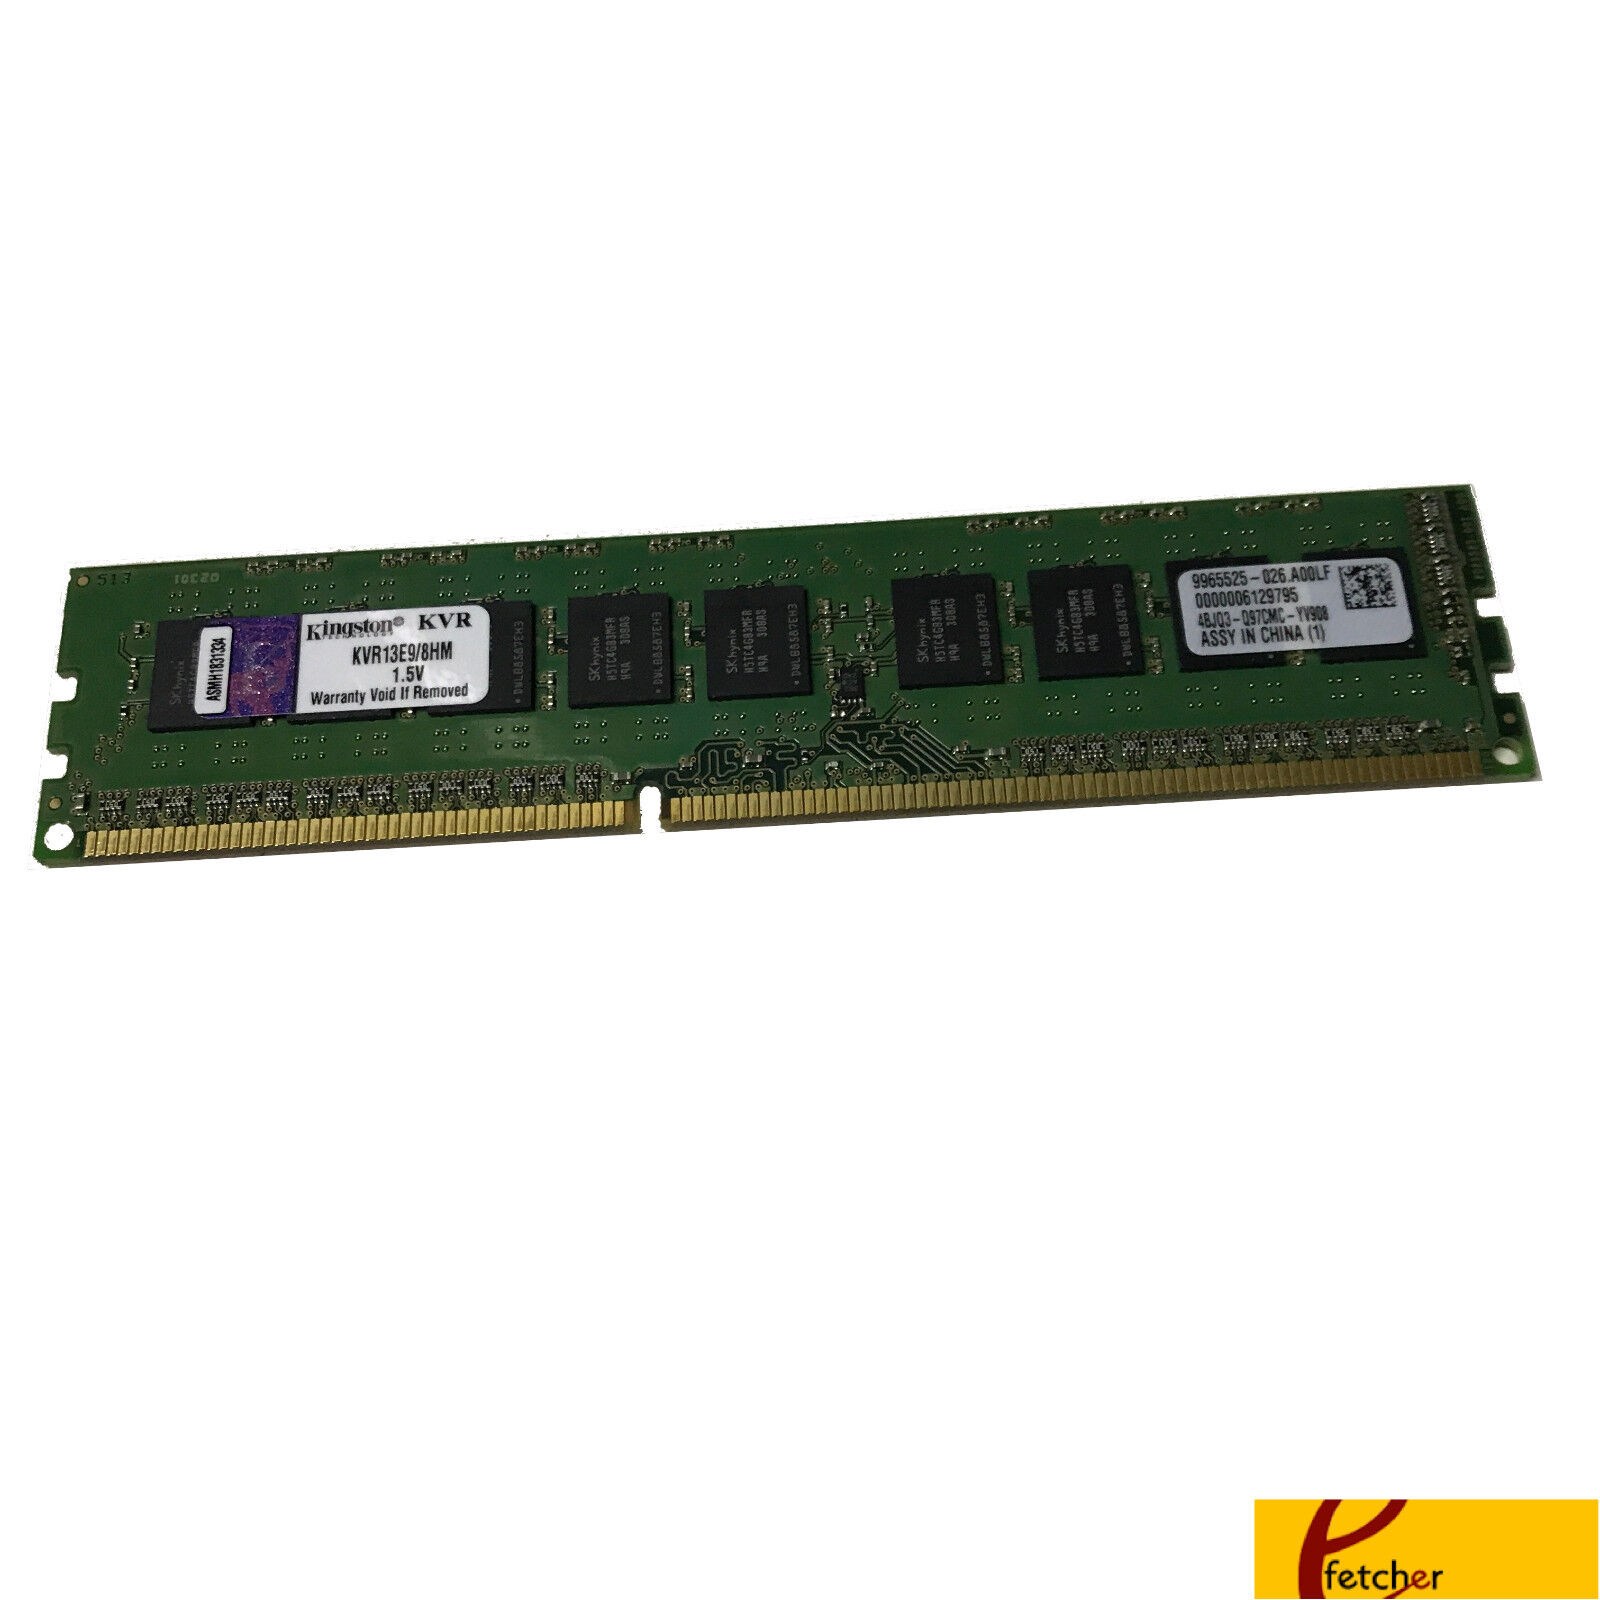 Kingston PC3-10600 8 GB DIMM 1333 MHz PC3-10600 DDR3 SDRAM Memory (KVR13E9/8HM)